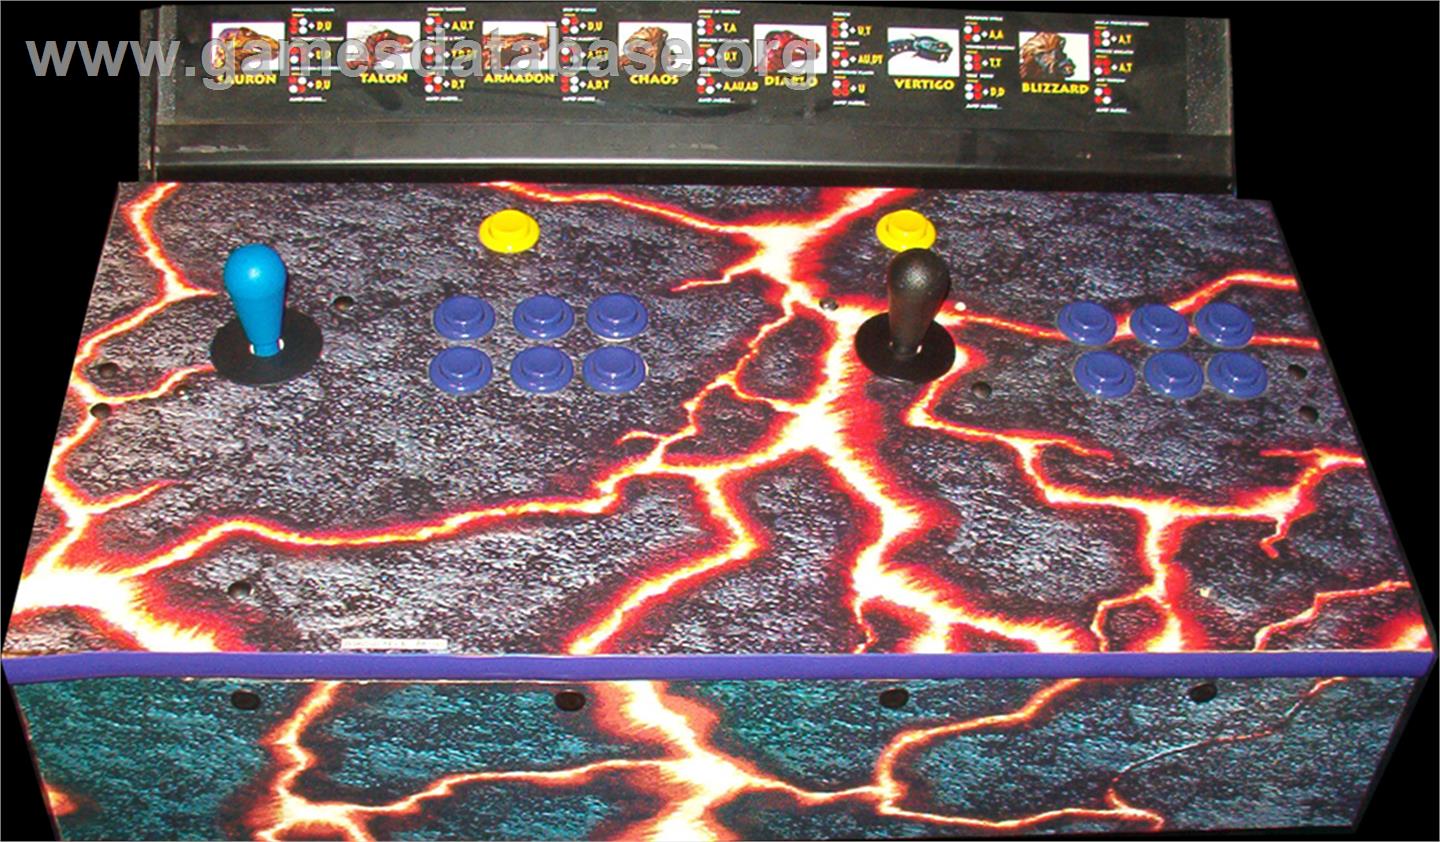 Primal Rage 2 - Arcade - Artwork - Control Panel